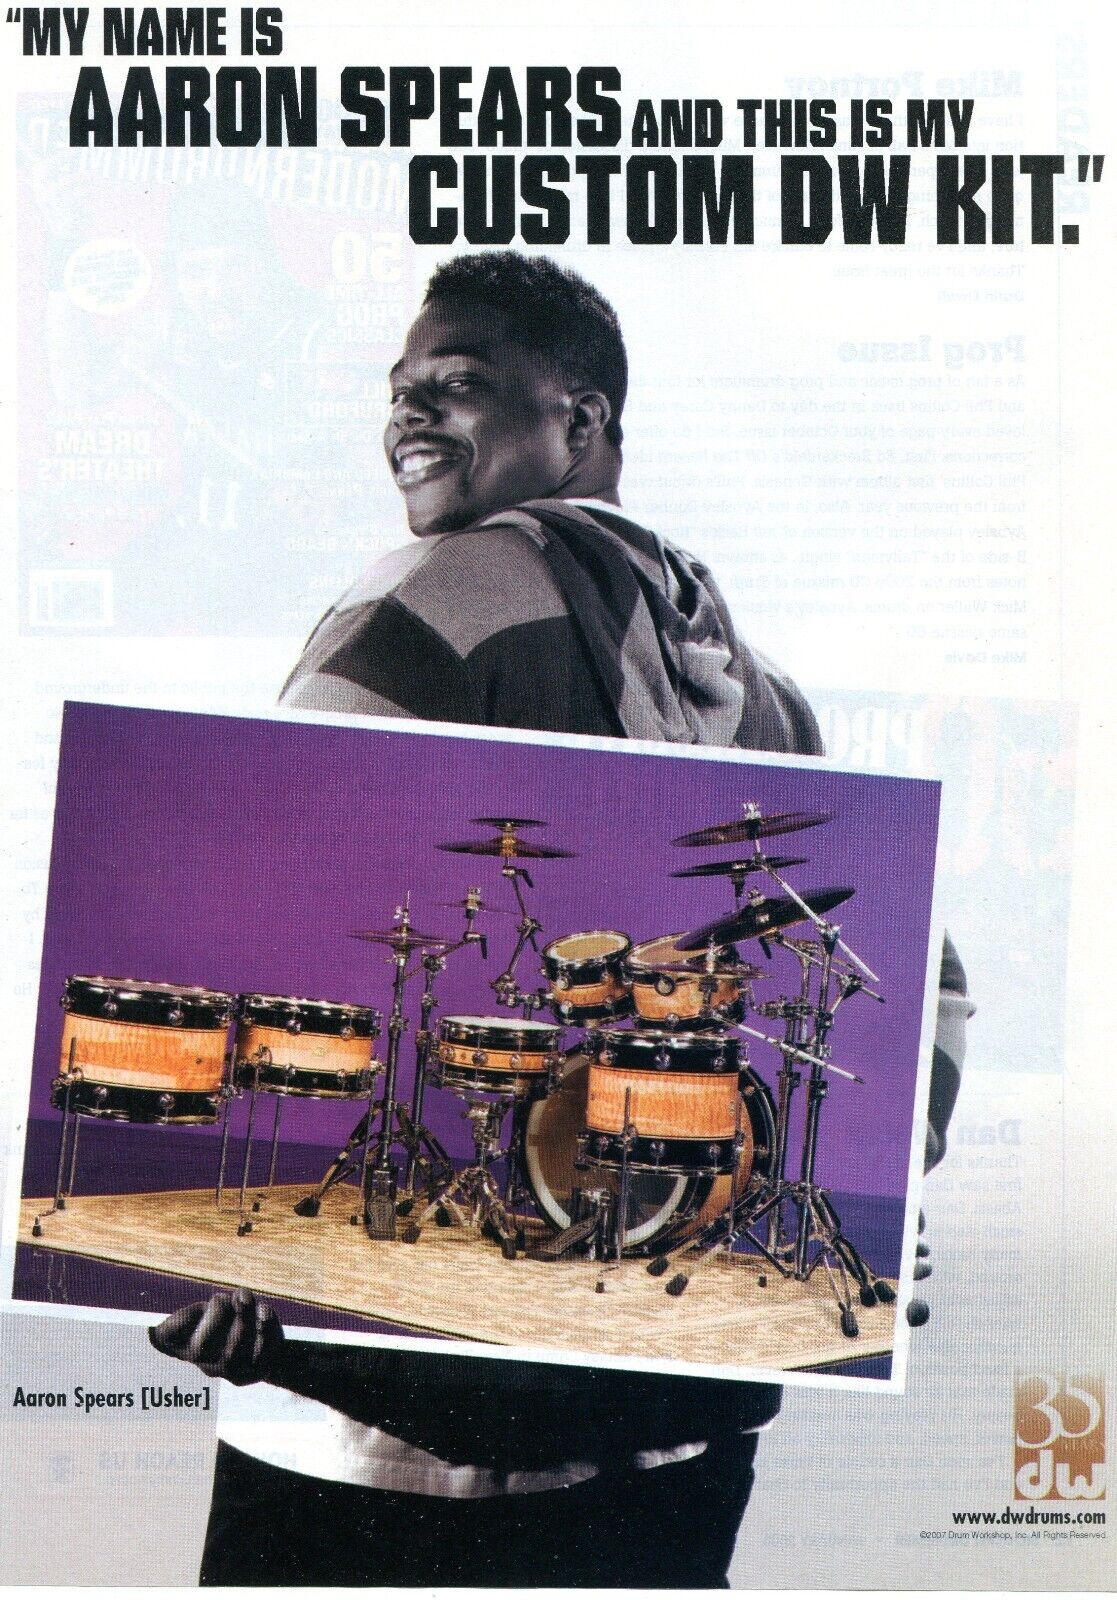 2008 Print Ad DW Drum Workshop Custom Kit w Aaron Spears of Usher